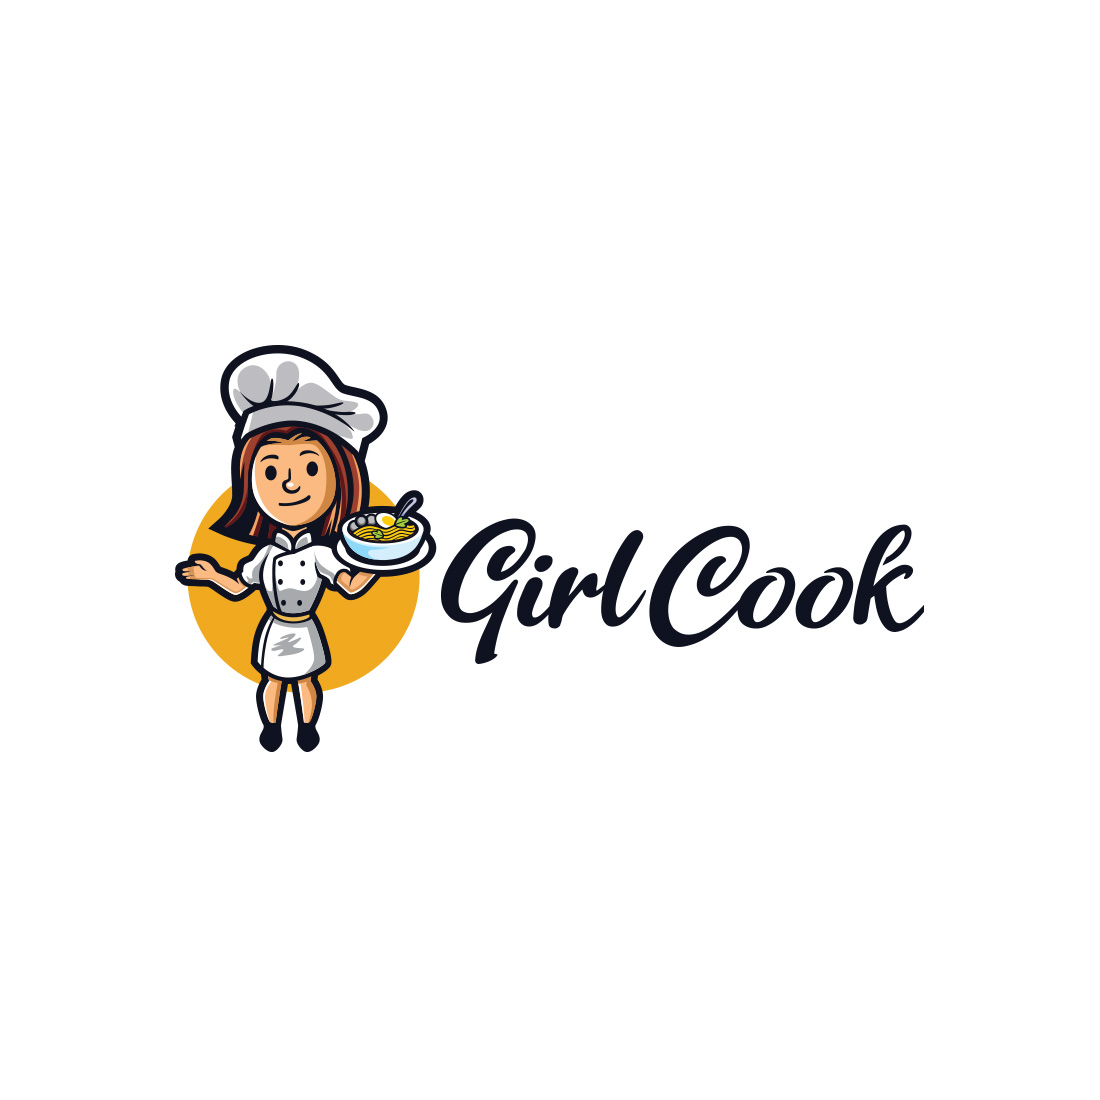 Girl Cook Mascot Logo Design cover image.